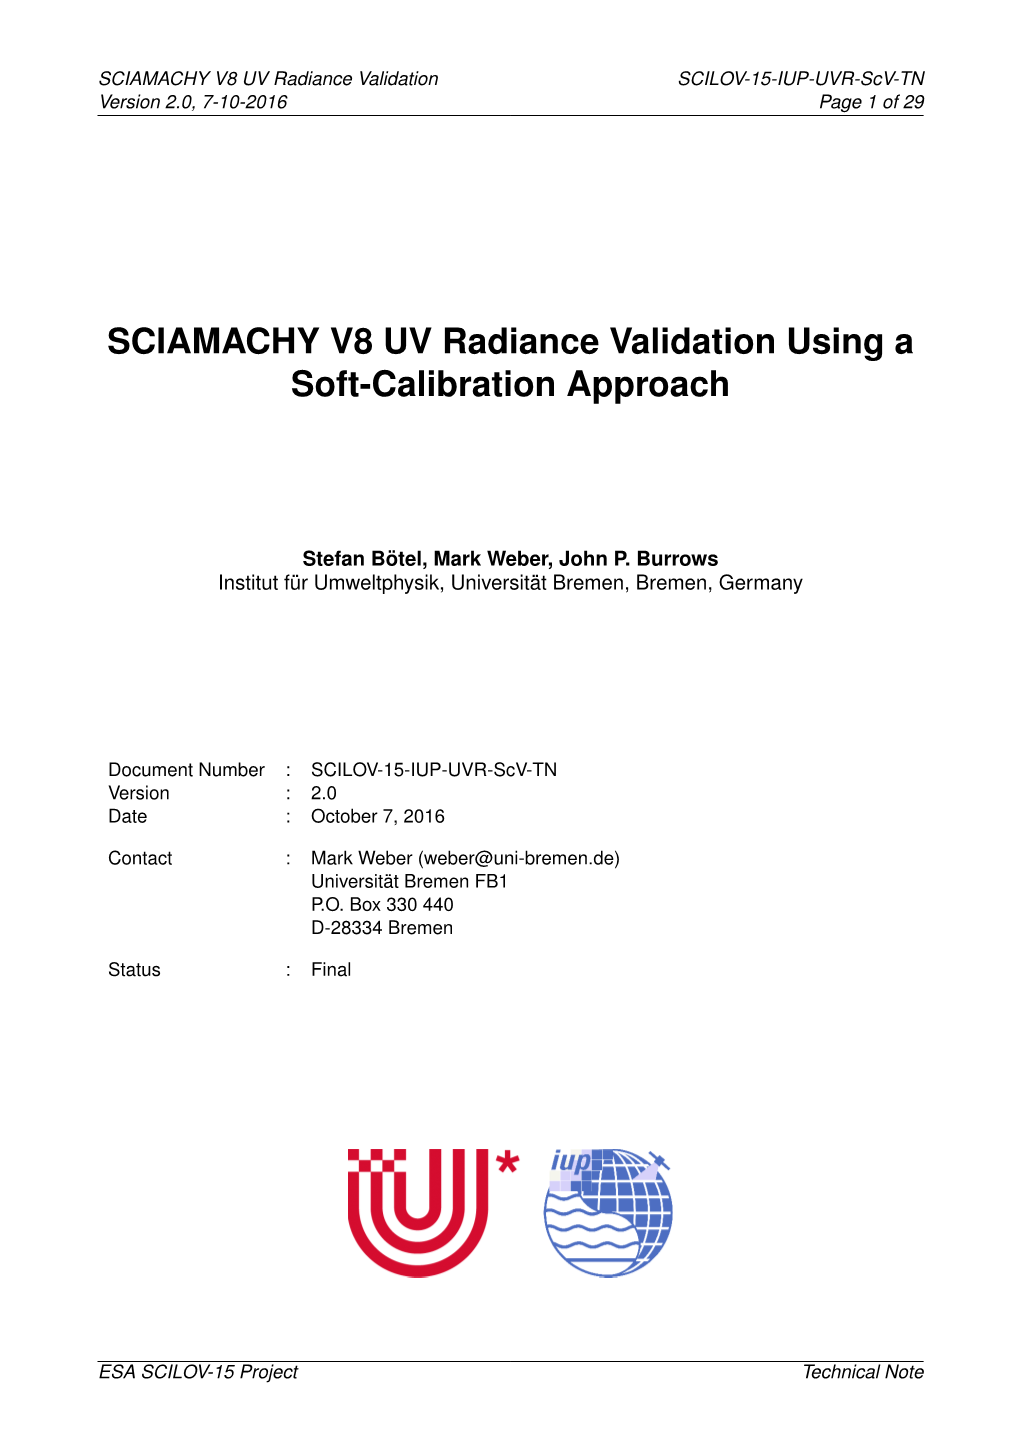 SCIAMACHY L1b V8 UV Radiance Validation Using a Soft-Calibration